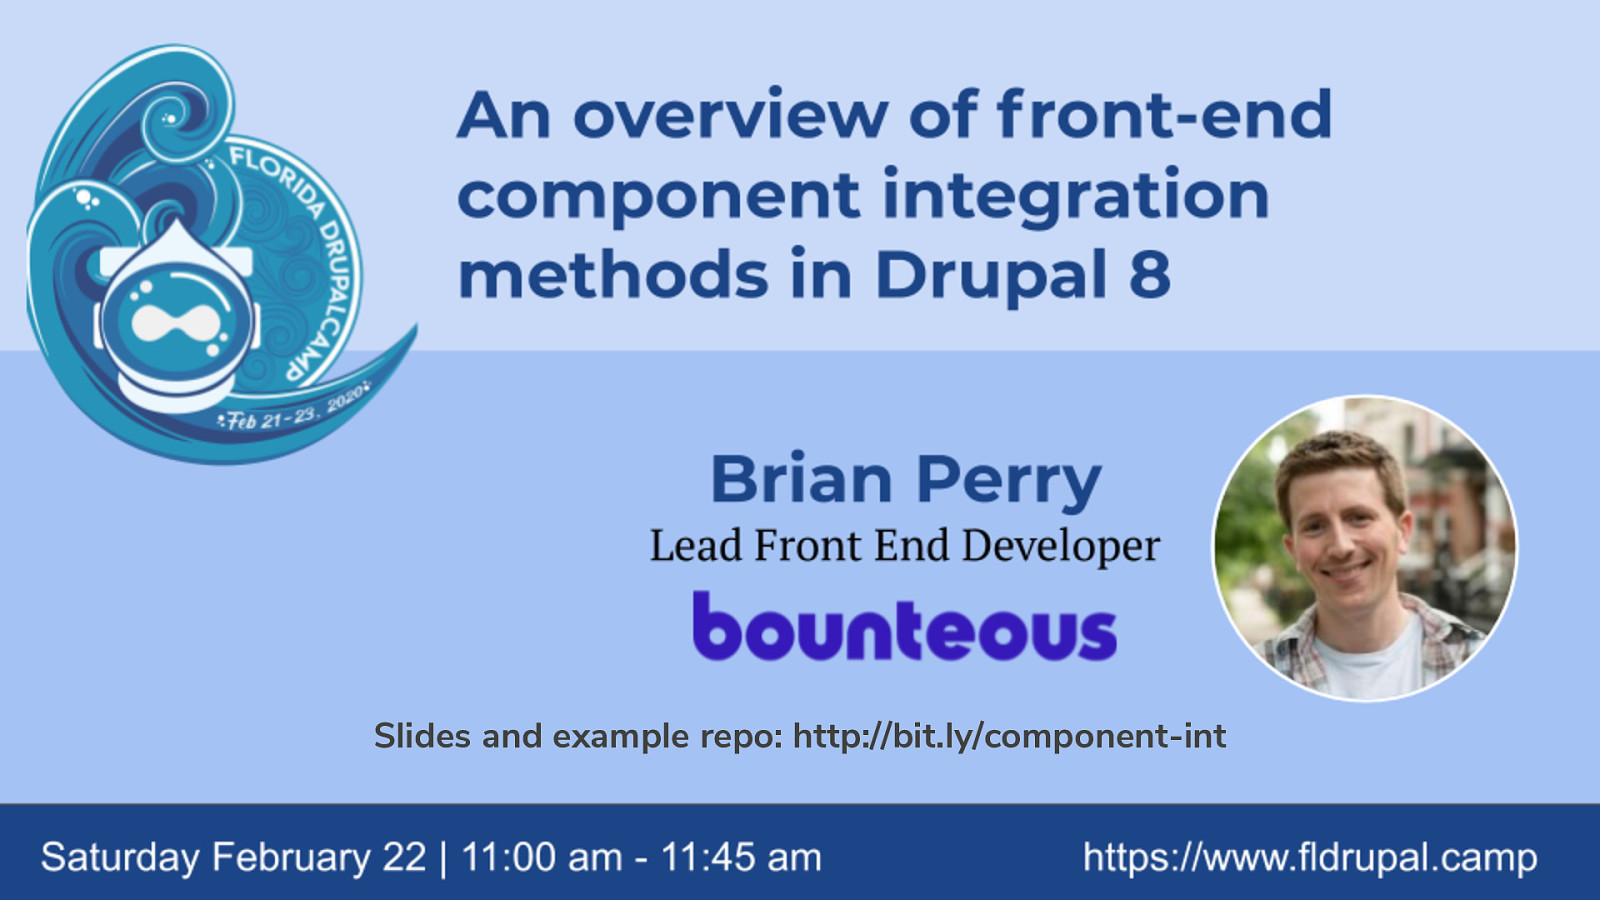 An overview of Drupal 8 front-end component integration methods